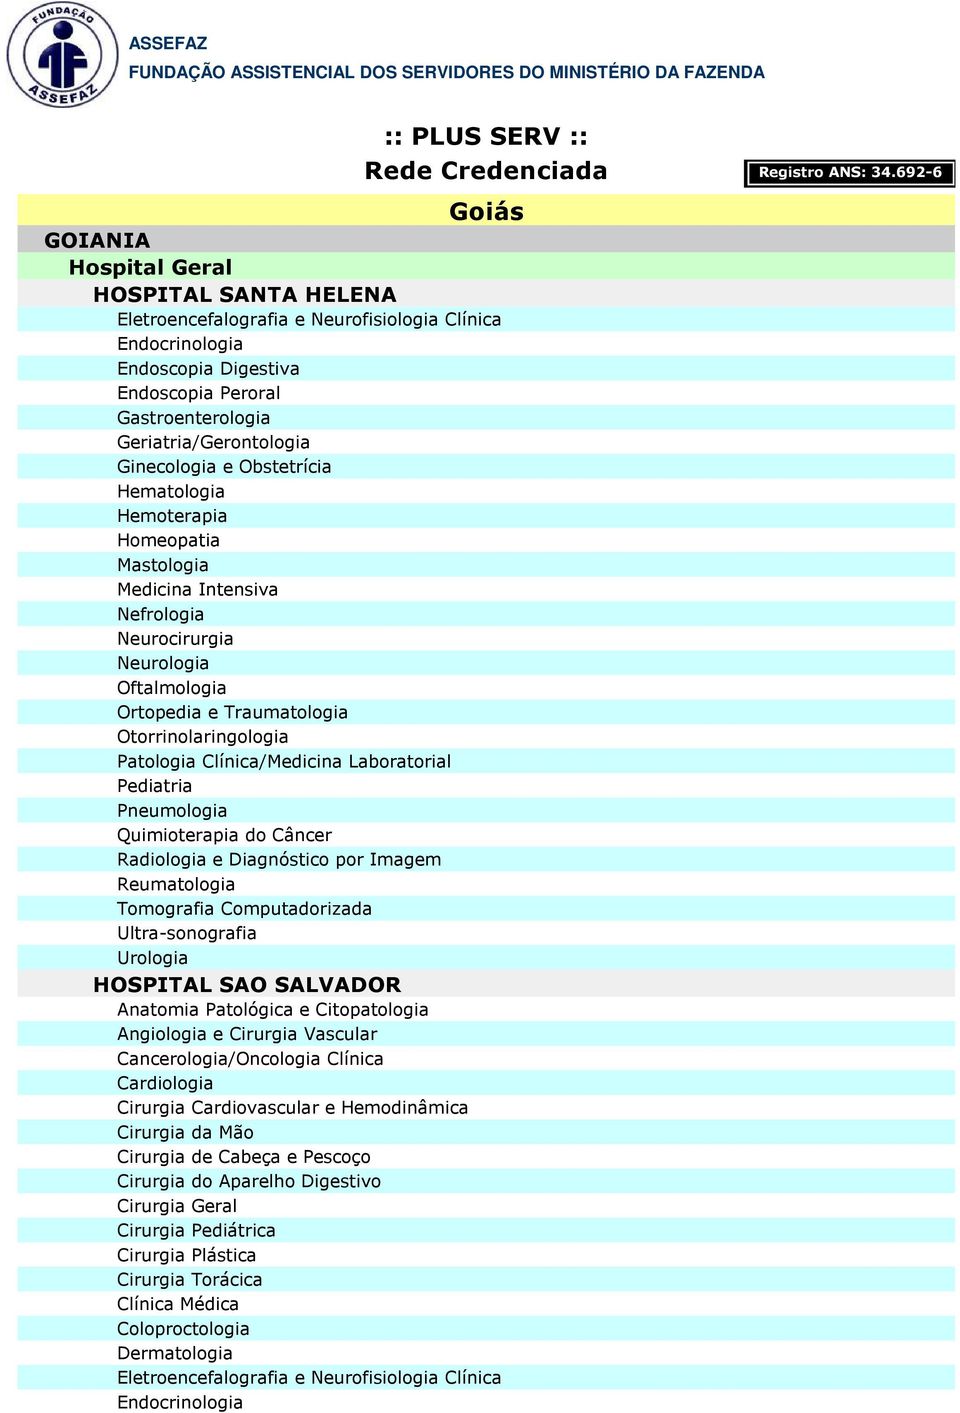 HOSPITAL SAO SALVADOR Cancerologia/Oncologia Clínica Cirurgia Cardiovascular